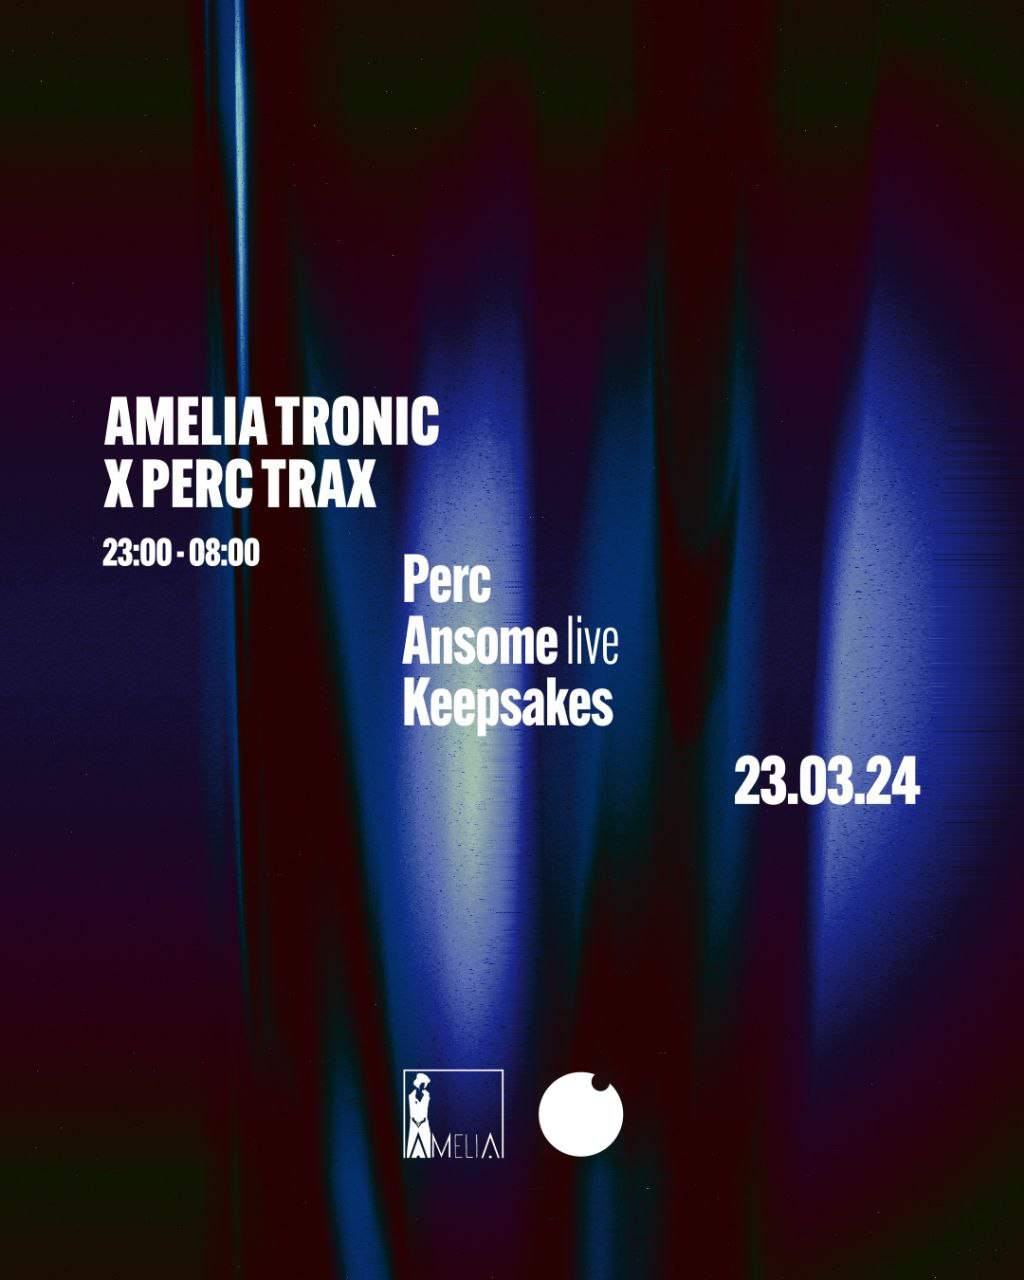 Amelia Tronic X Perc Trax /// Perc - Ansone live - Keepsakes - フライヤー表